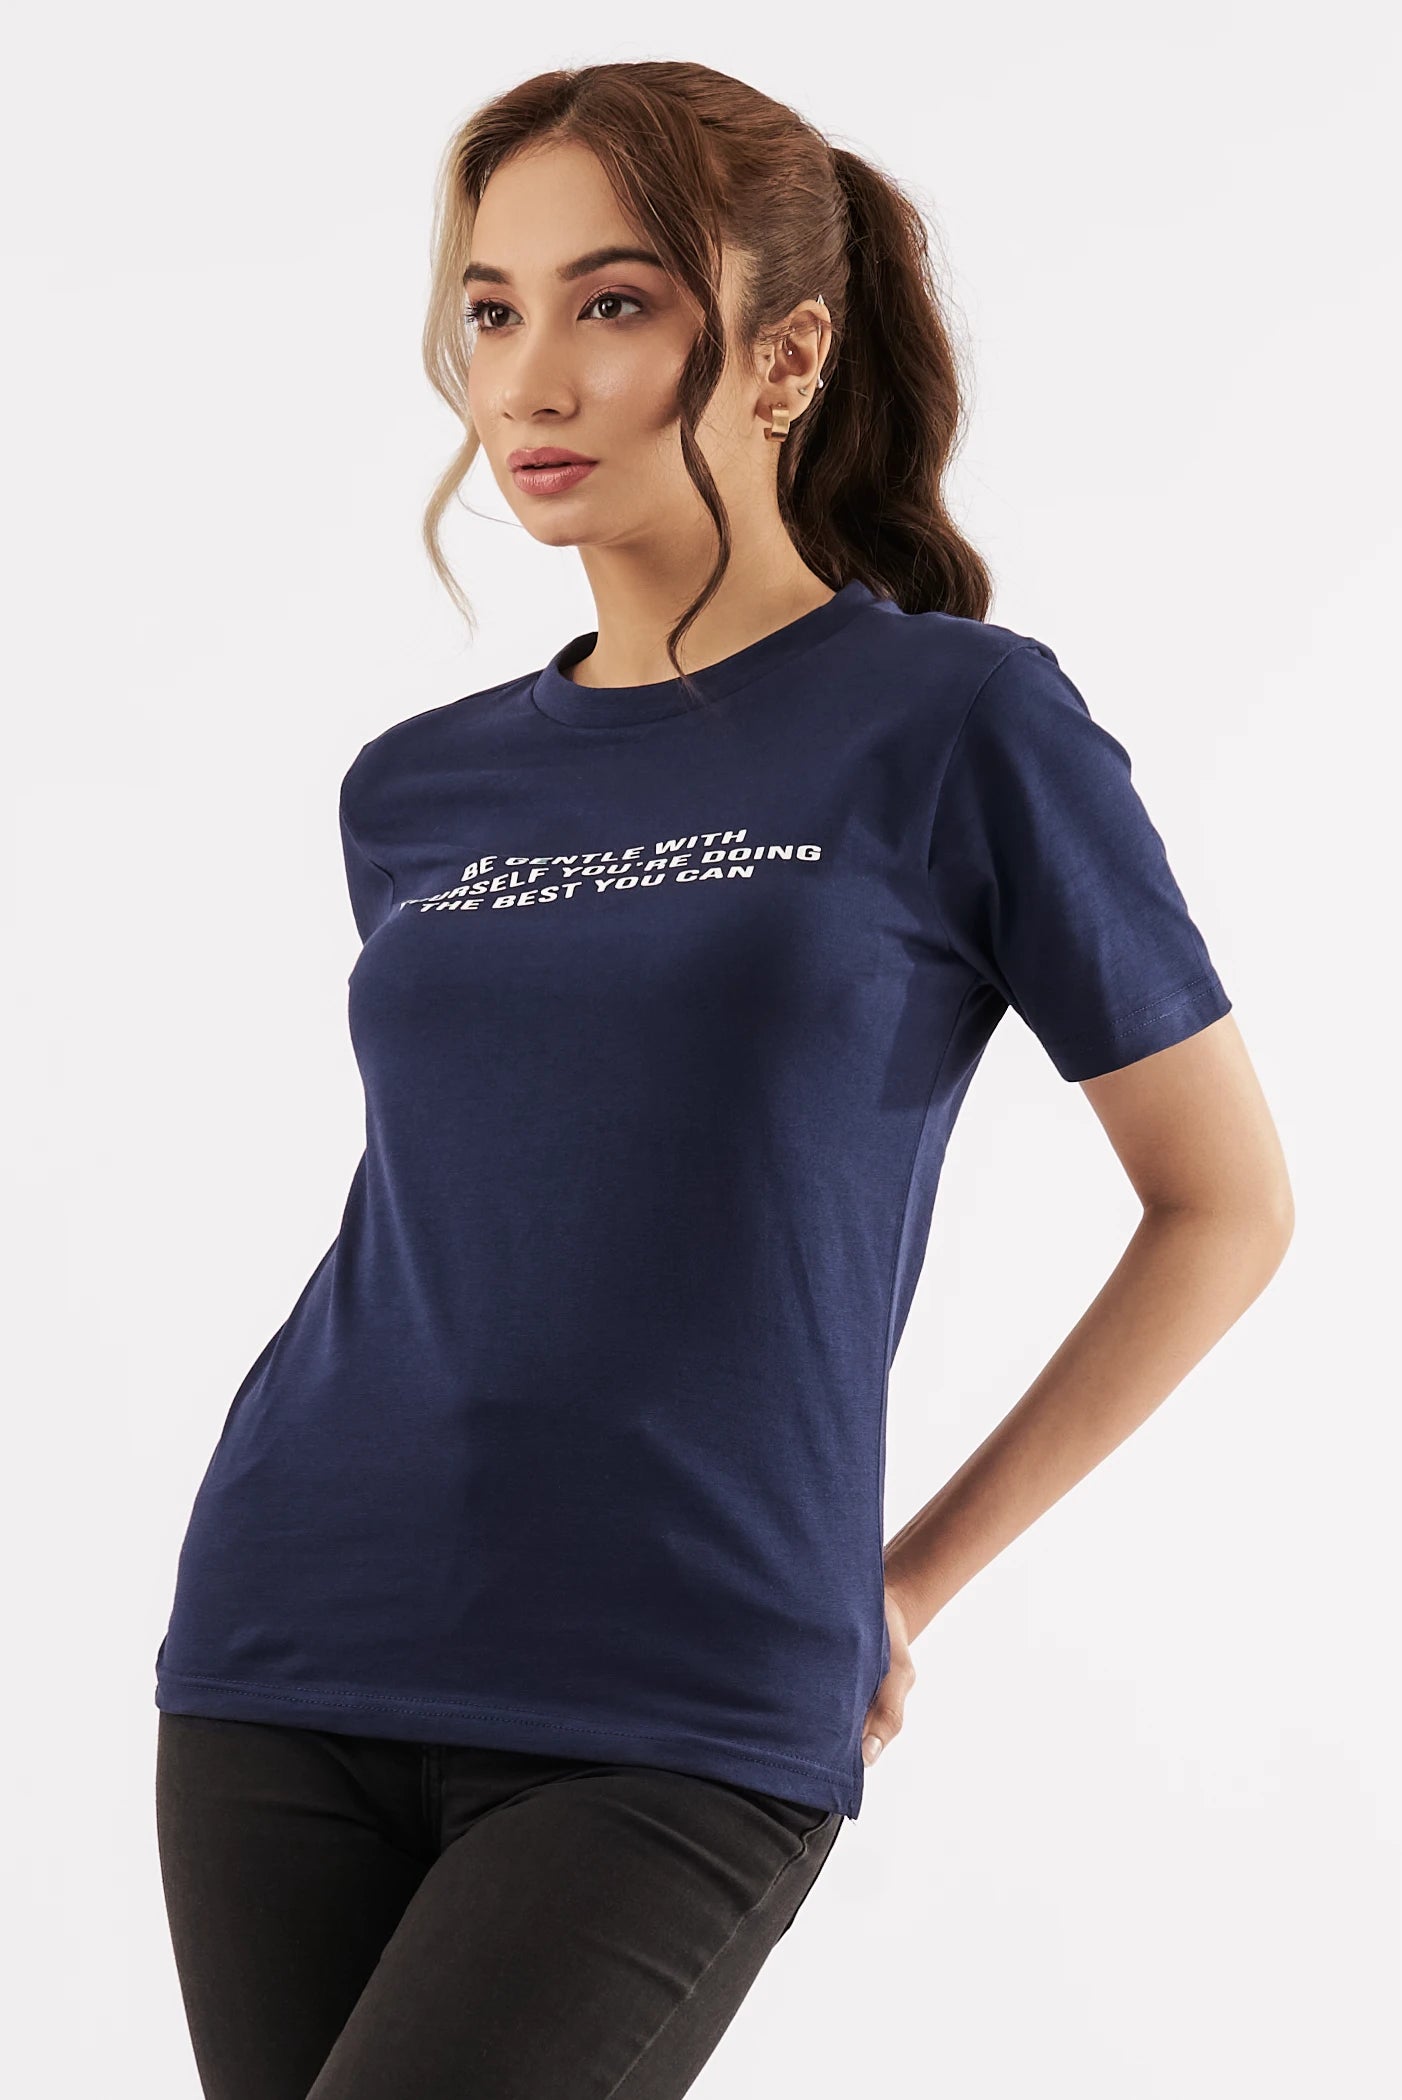 Women's Self-Compassion Graphic T-Shirt Blue